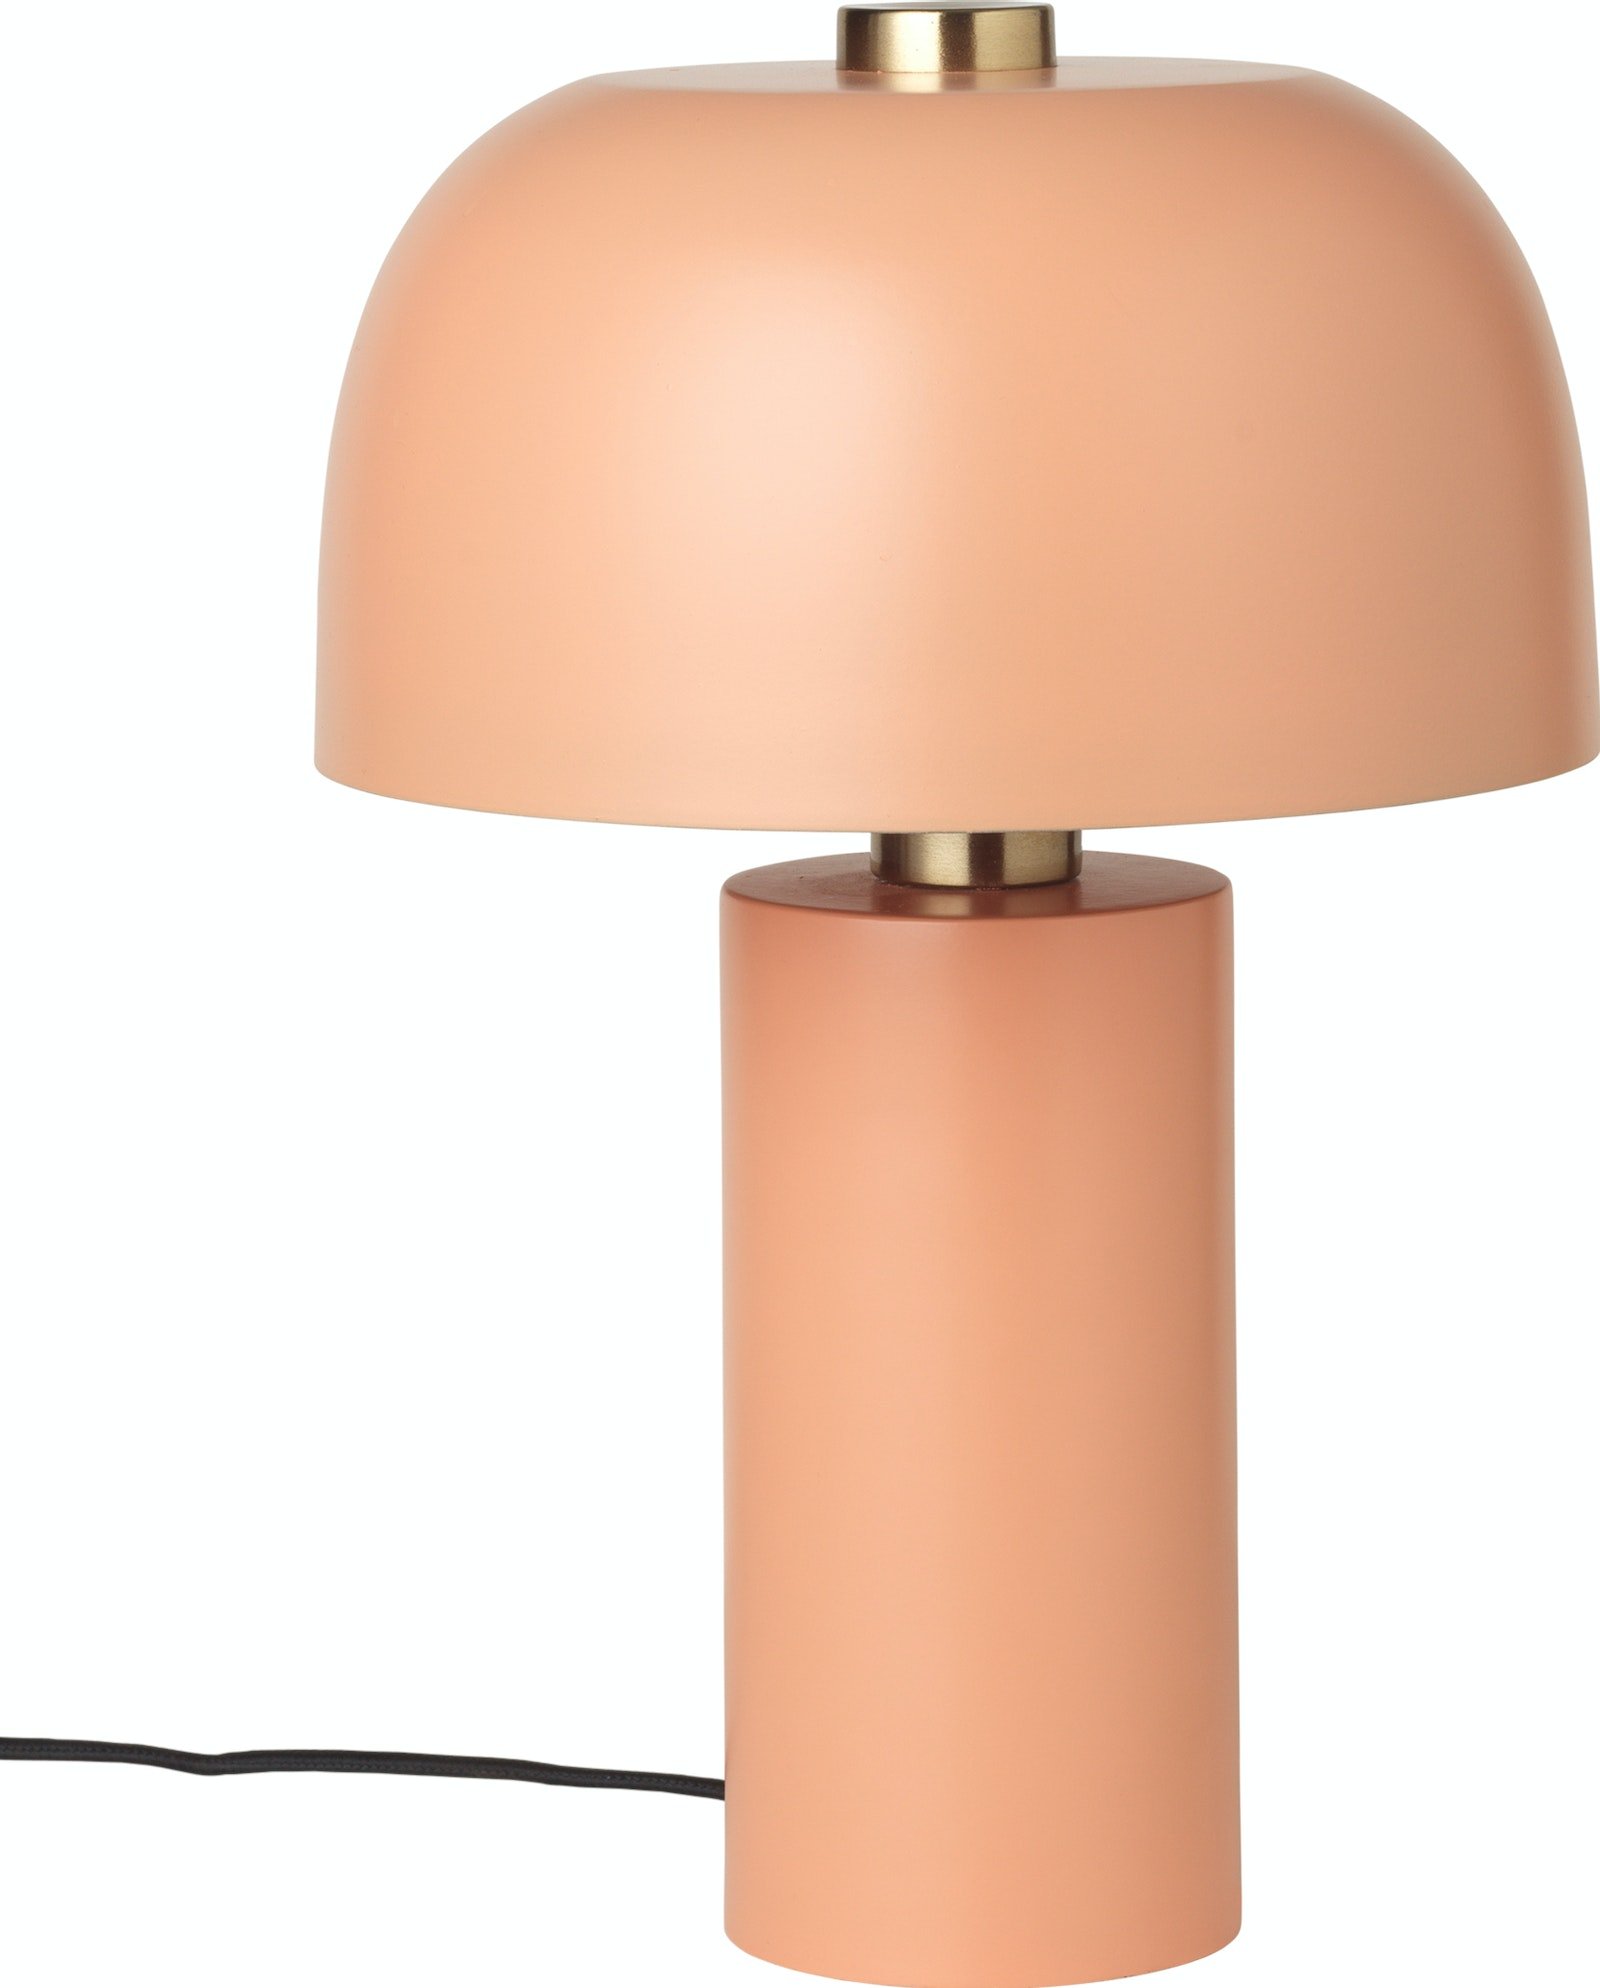 På billedet ser du variationen Lulu, Bordlampe, Jern fra brandet Cozy Living i en størrelse D: 26 cm. x H: 37 cm. i farven Laks